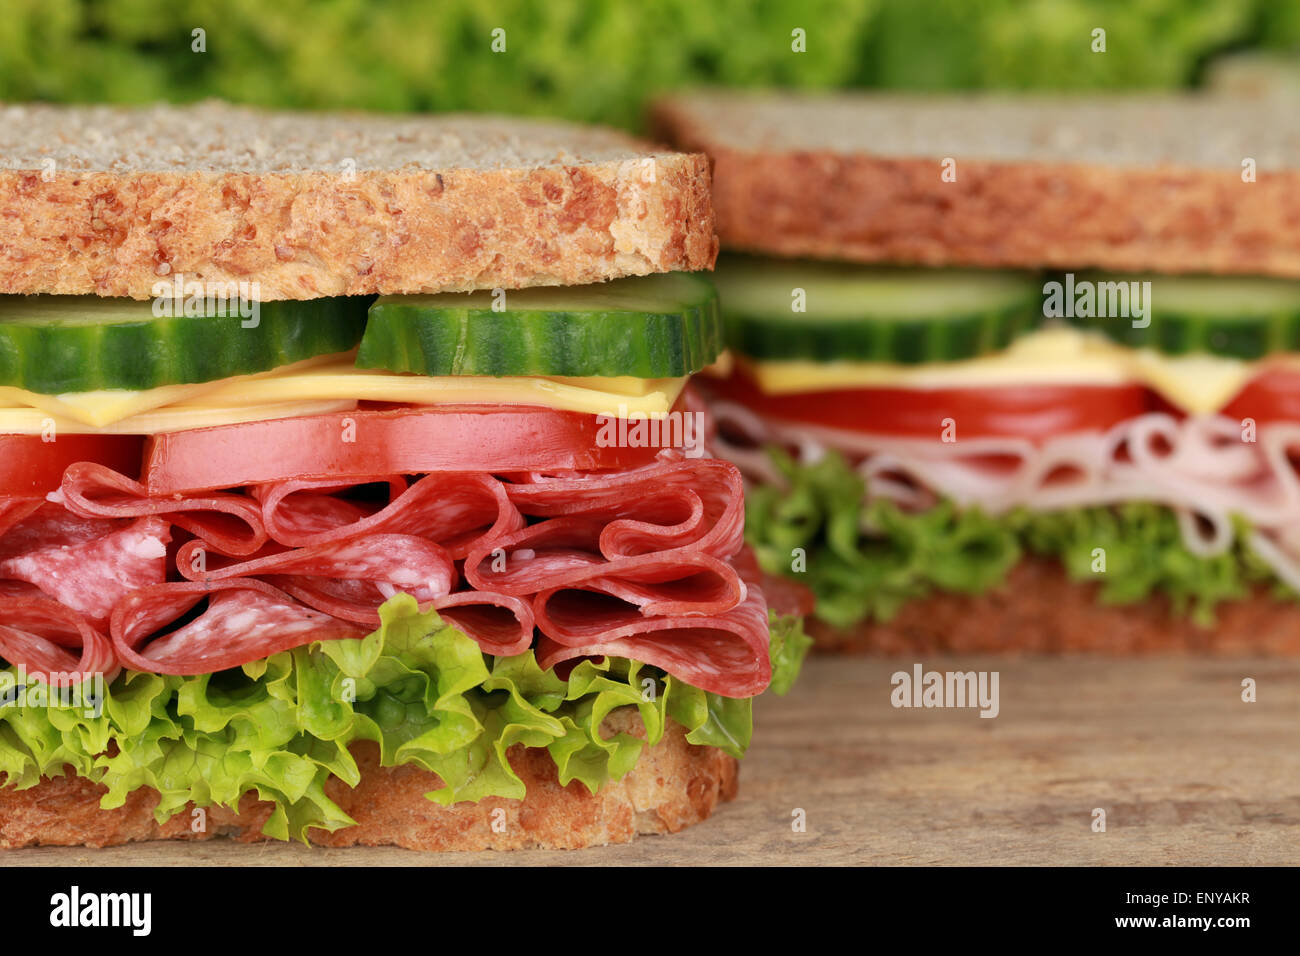 Sandwiches Stock Photo